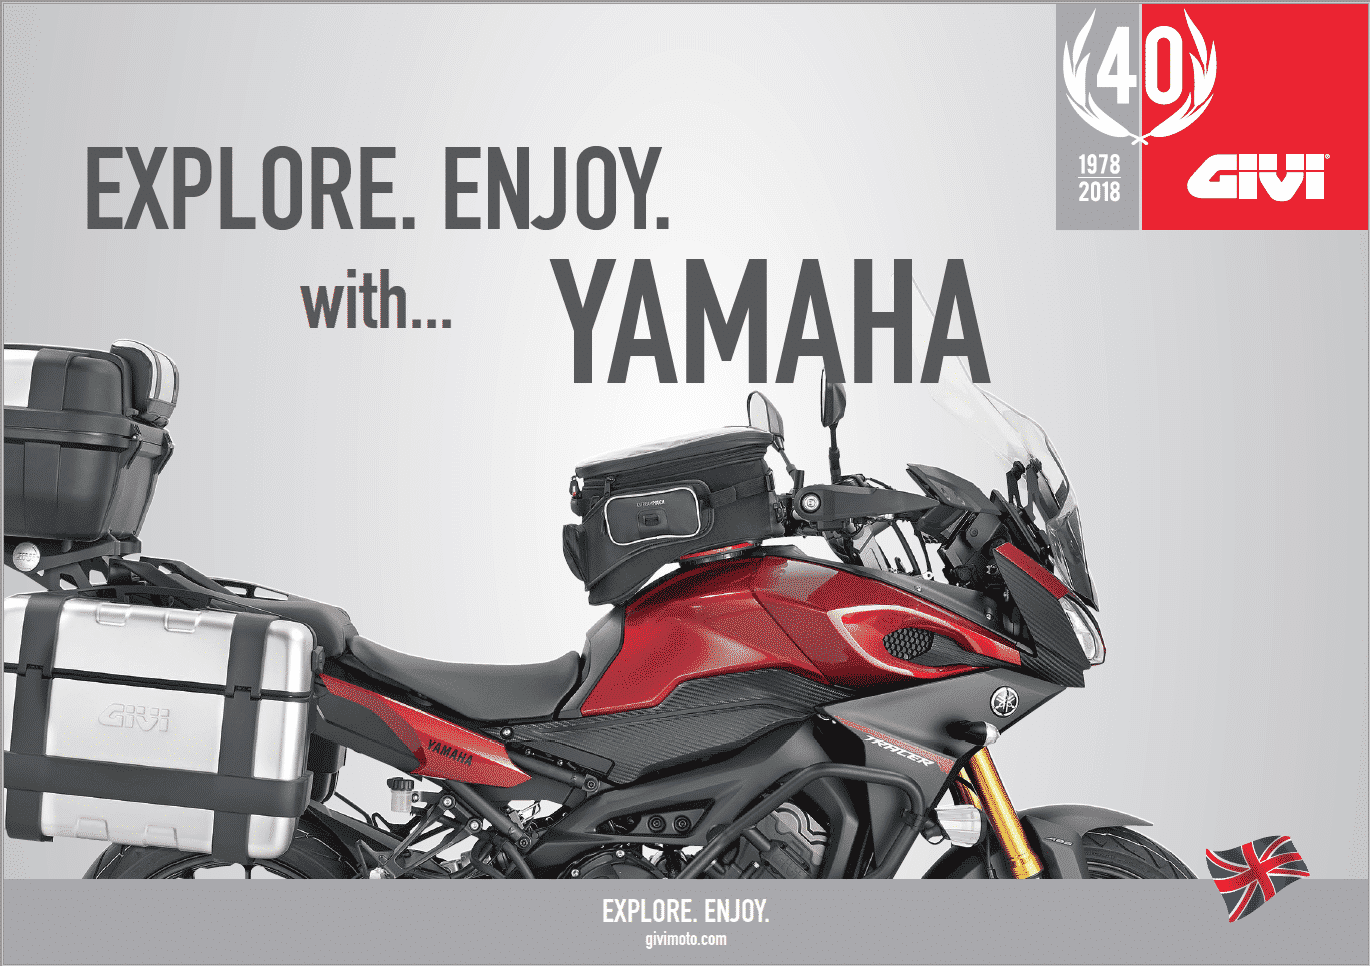 GIVI Accessories for Yamaha Motorcycles - ของแต่ง GIVI สำหรับ Yamaha